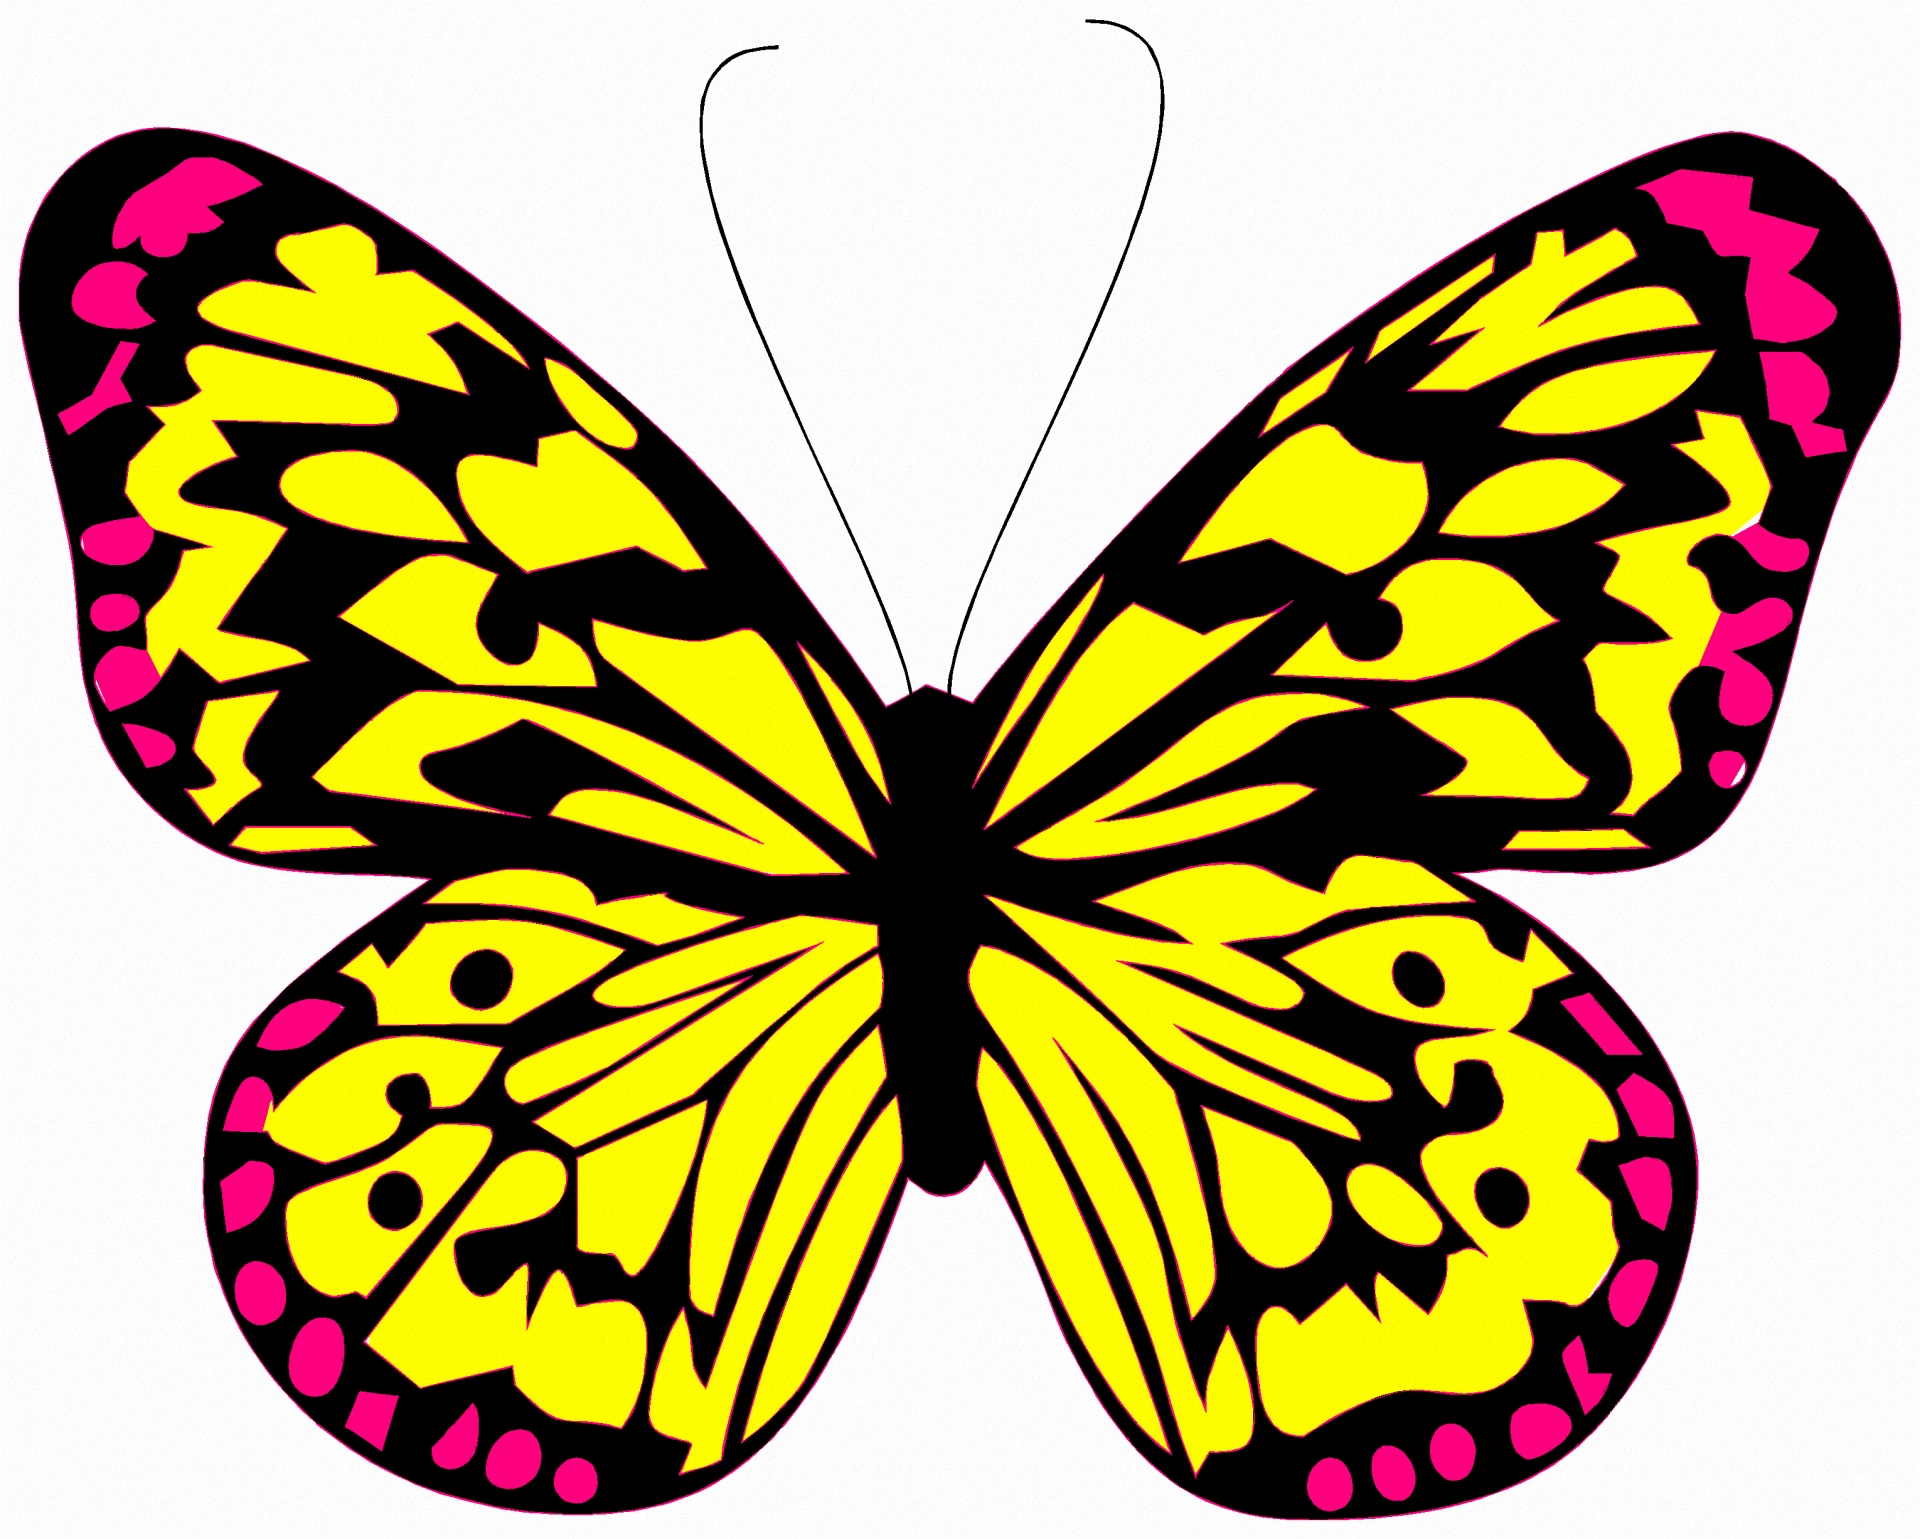 Цветной трафарет. Бабочки трафарет цветные. Разноцветные бабочки для вырезания. Бабочка рисунок. Бабочки трафареты для вырезания цветные.